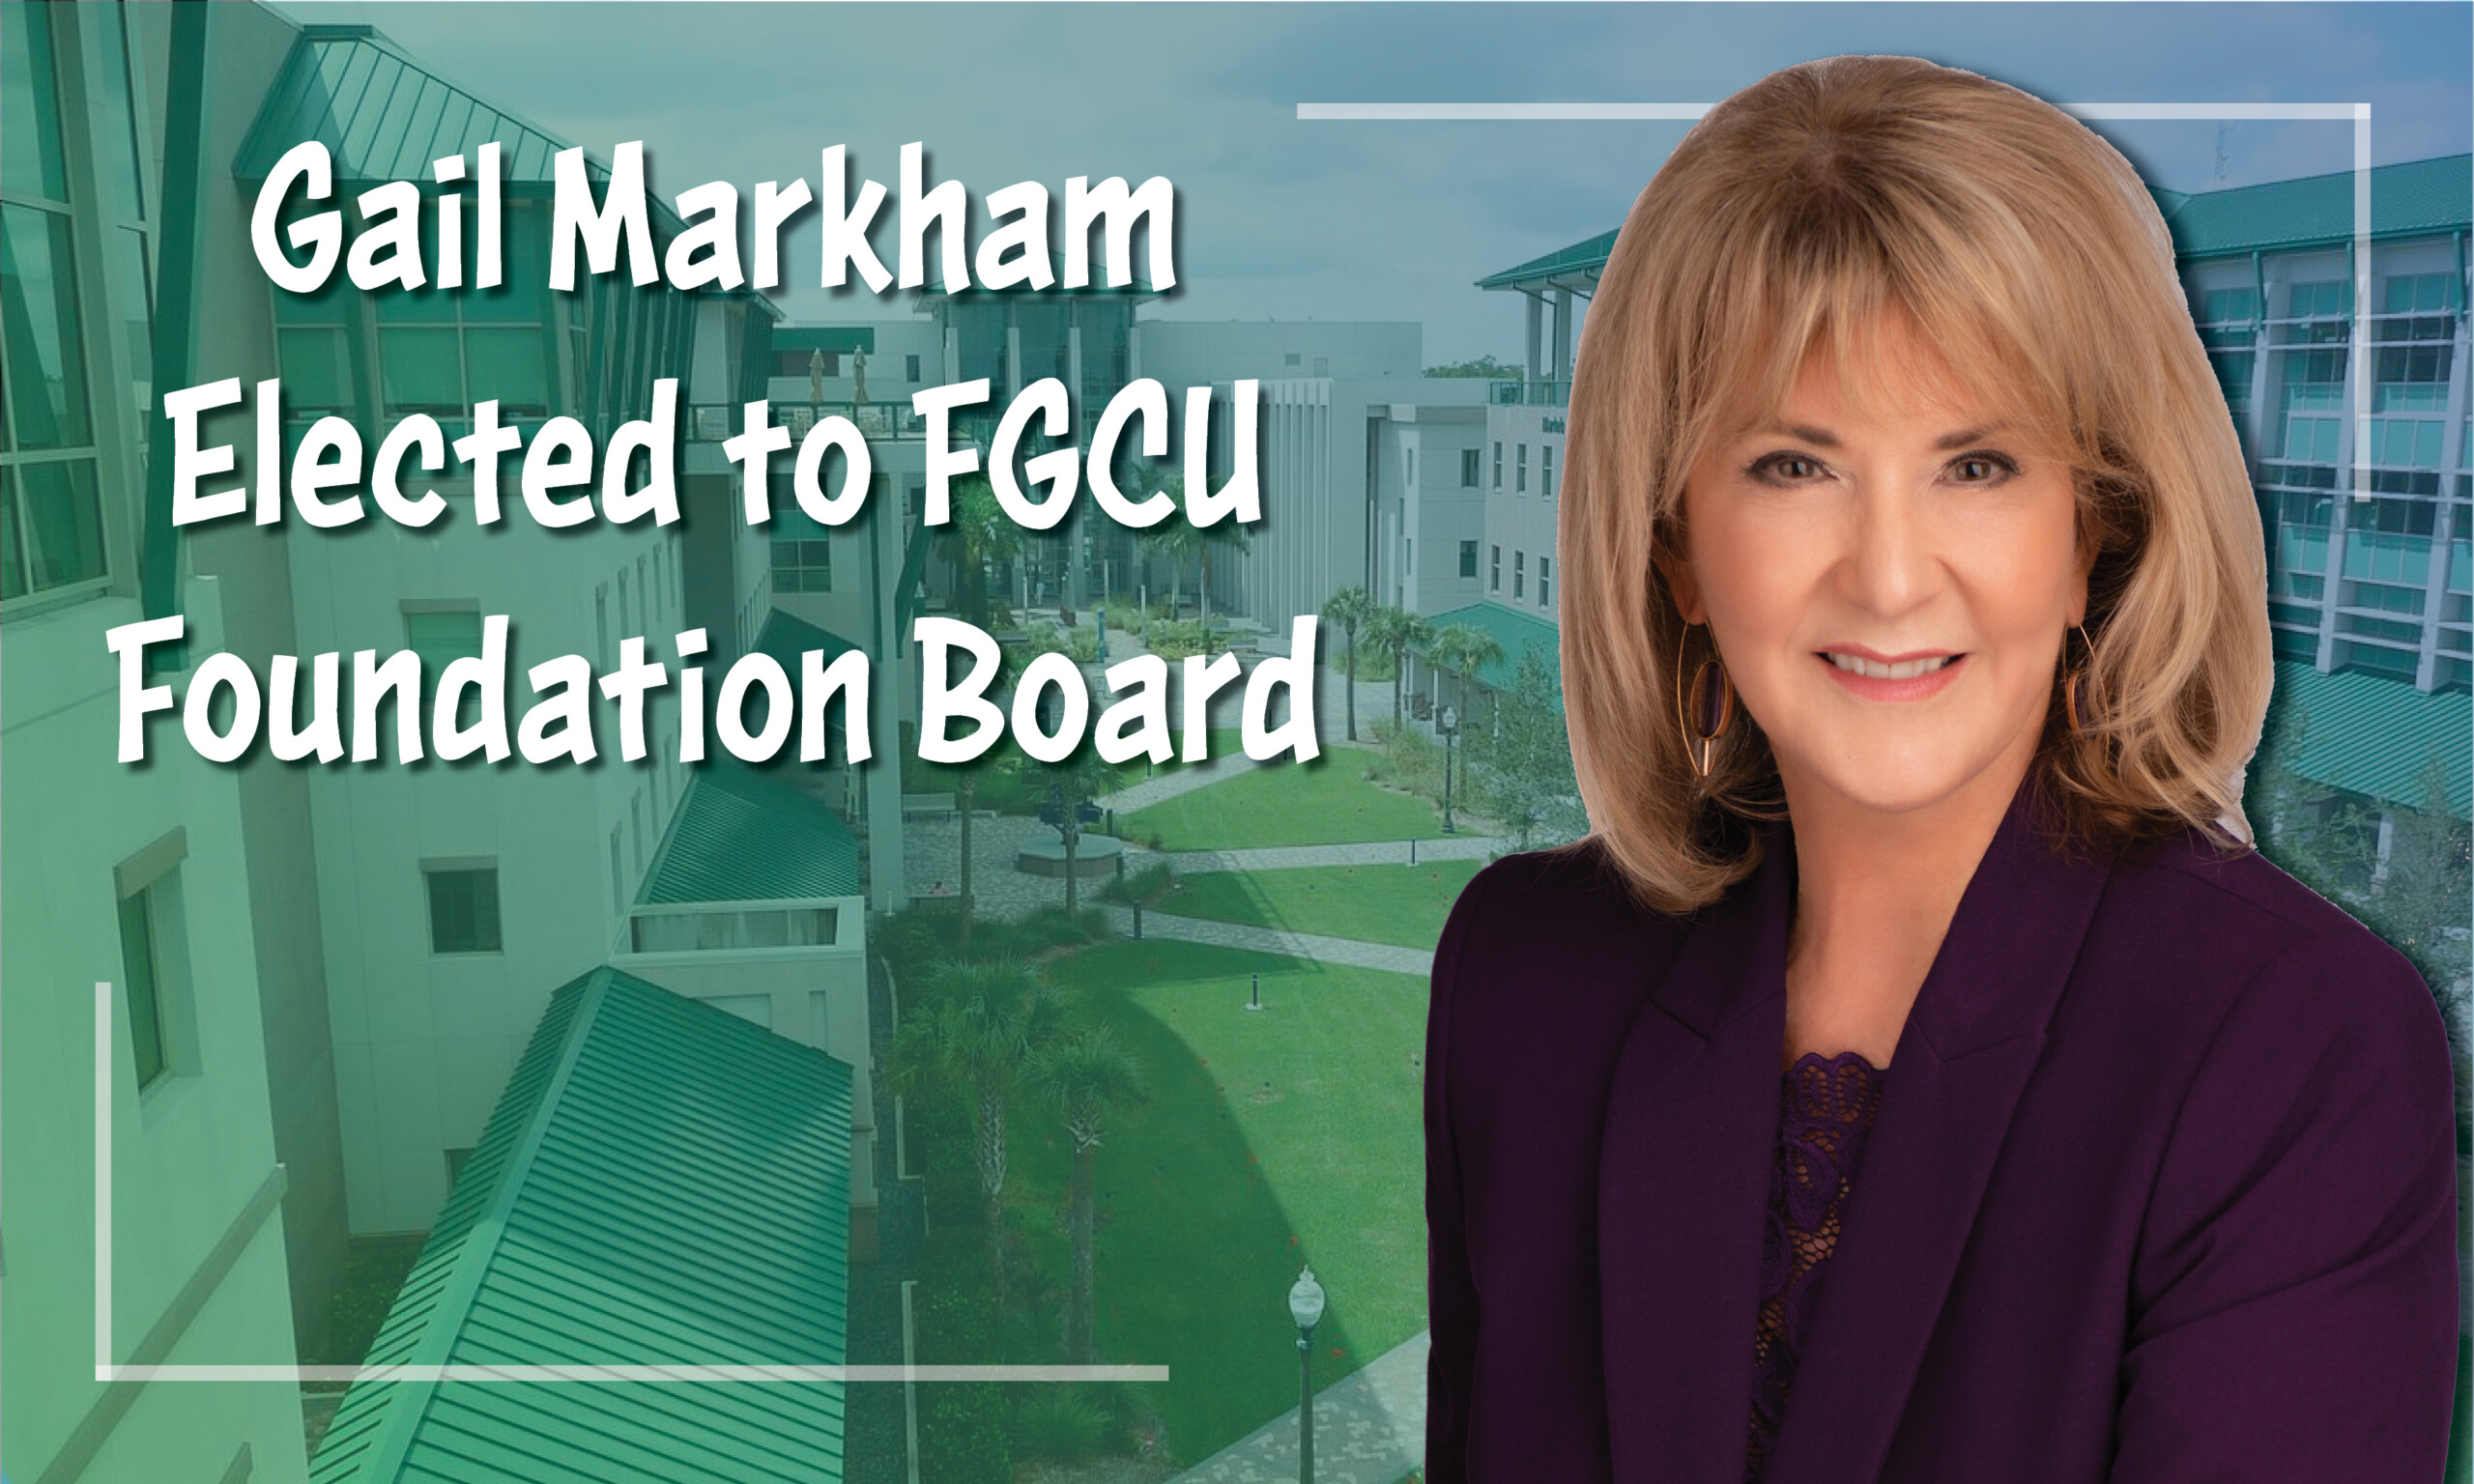 Gail Markham Elected to FGCU Foundation Board